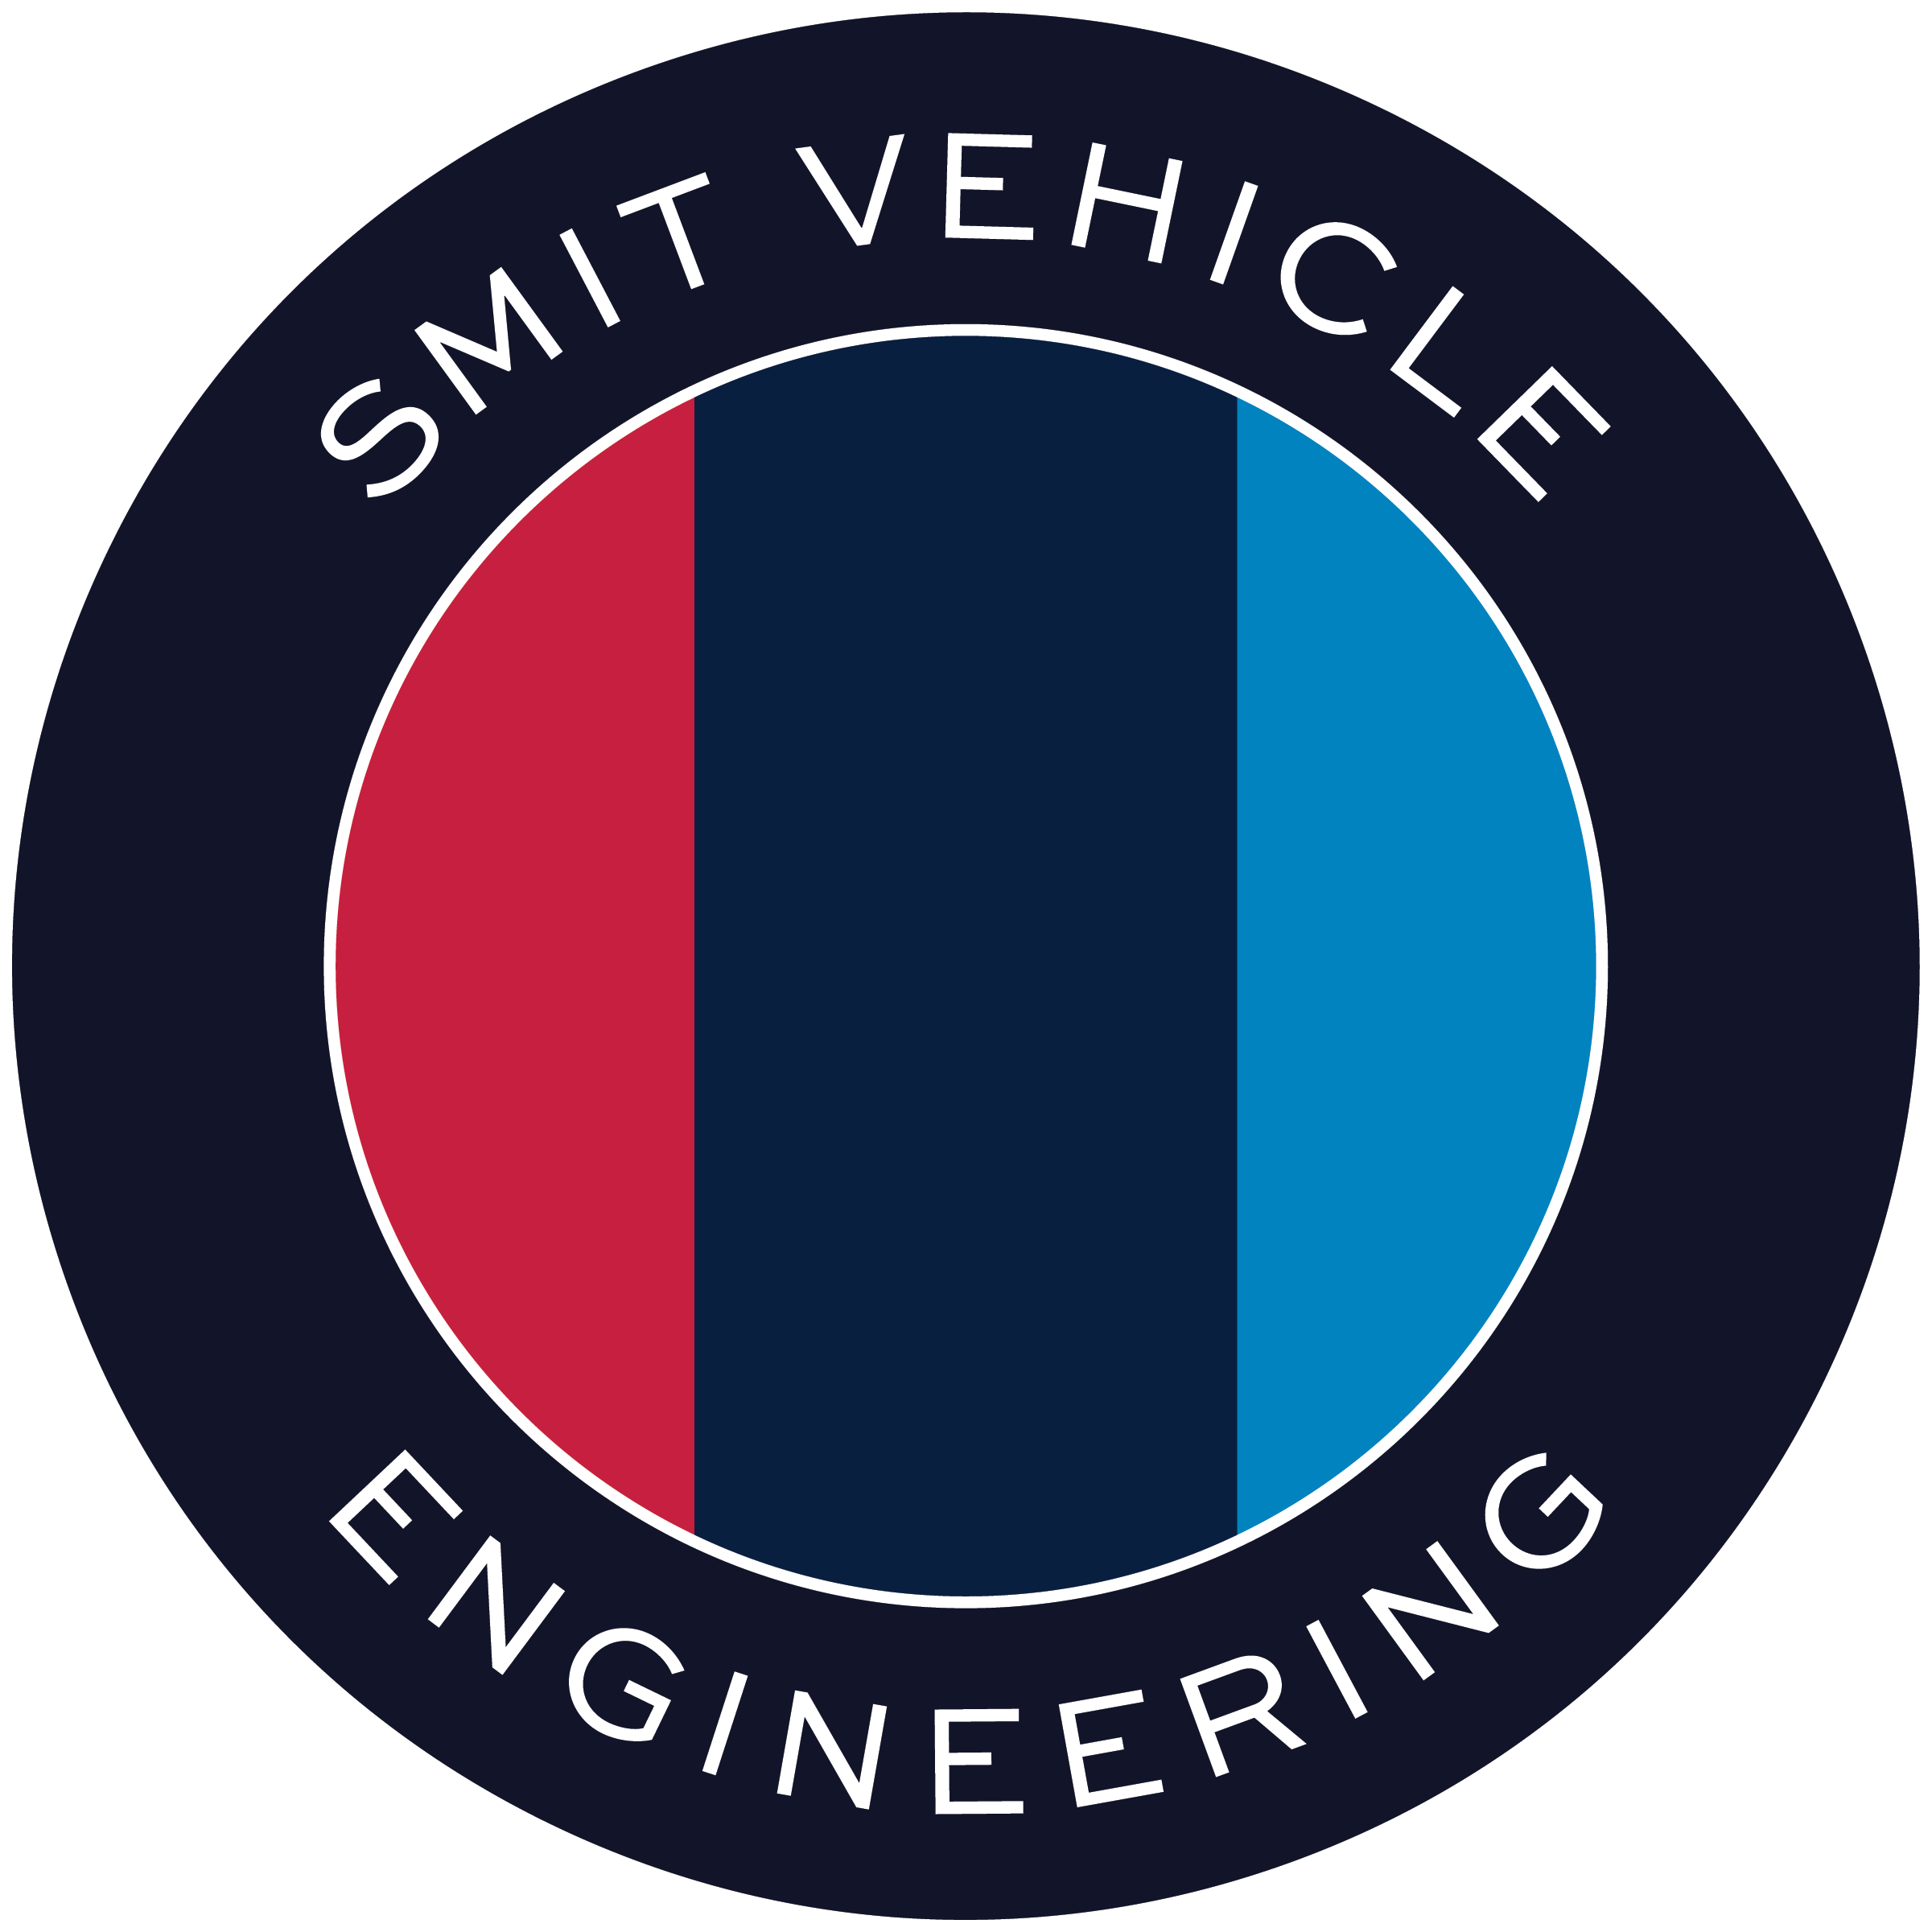 Smit Vehicle Engineering